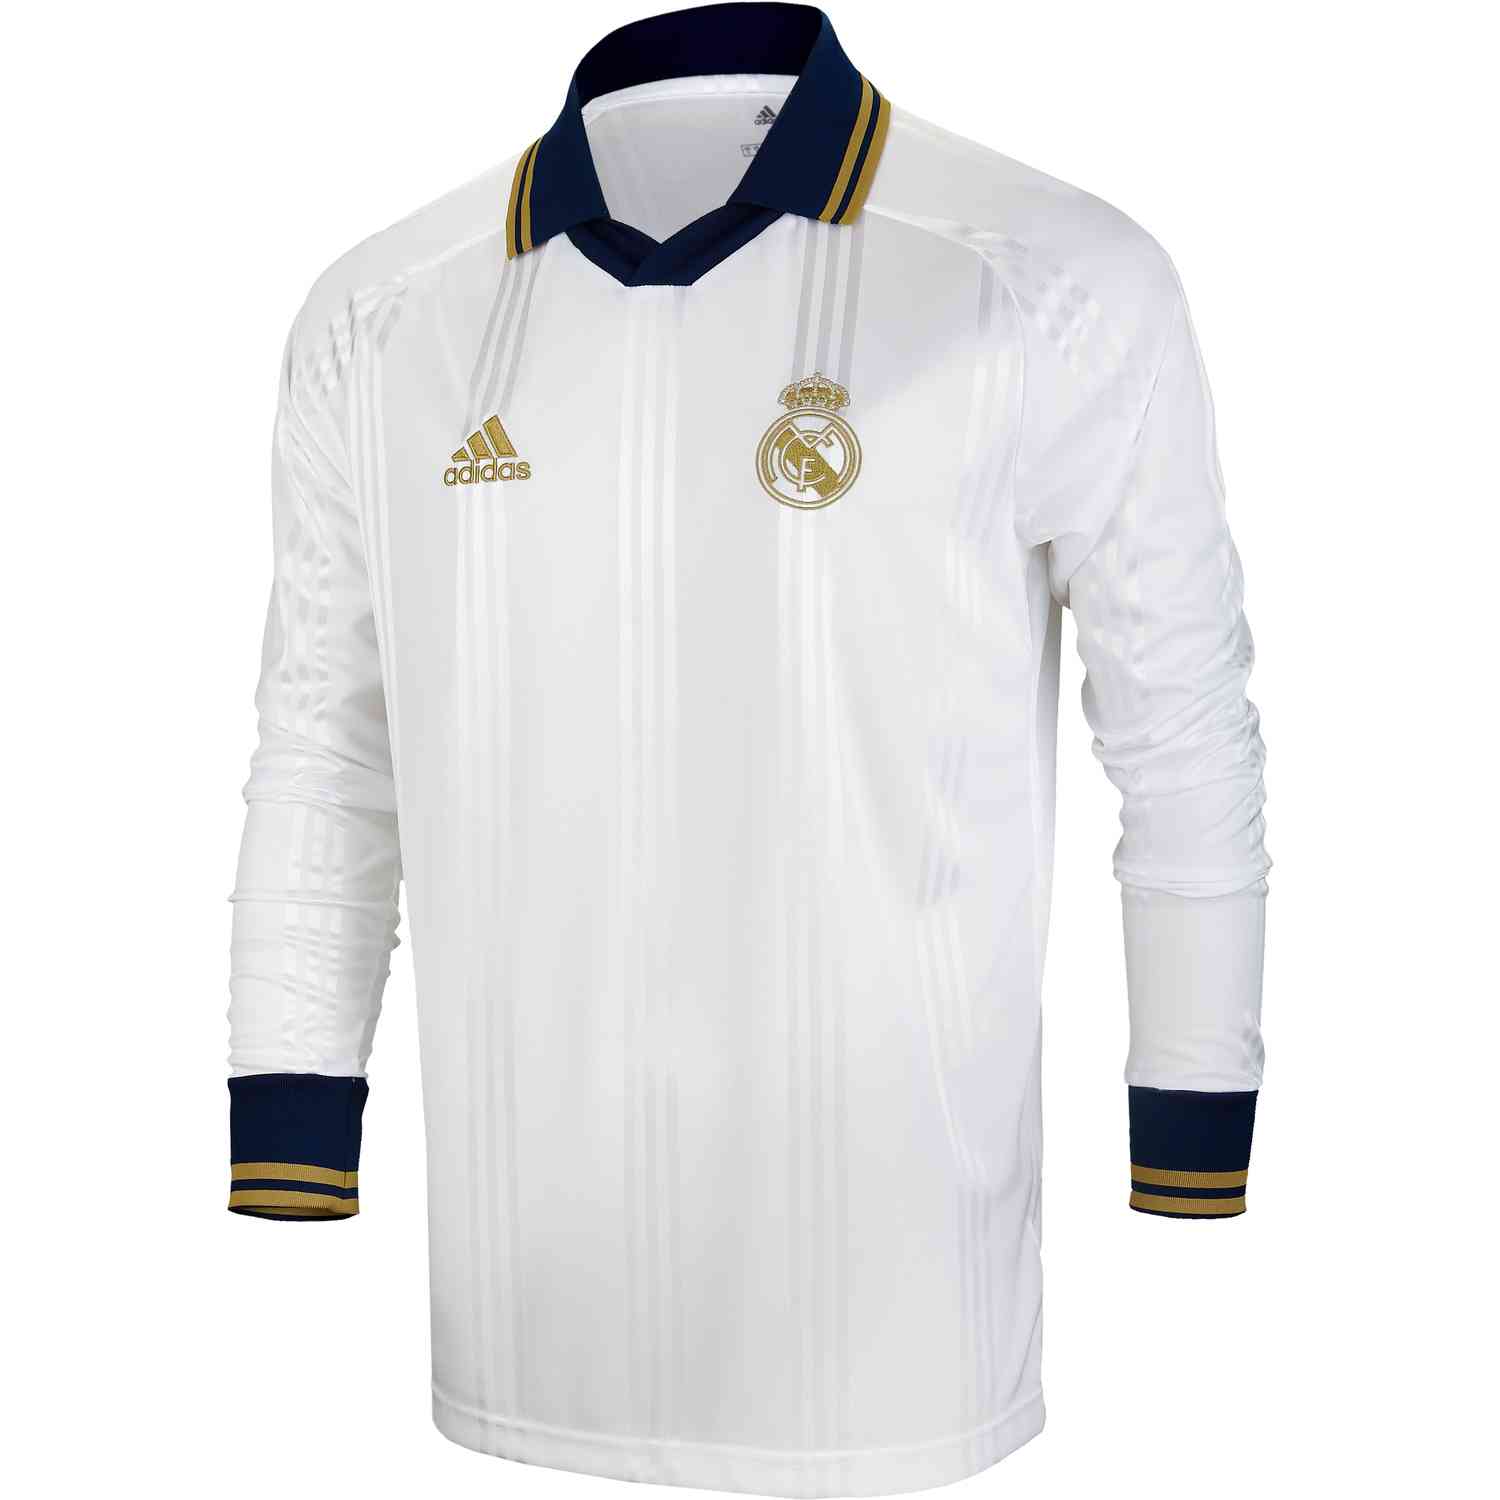 adidas Real Madrid - White/Black - SoccerPro